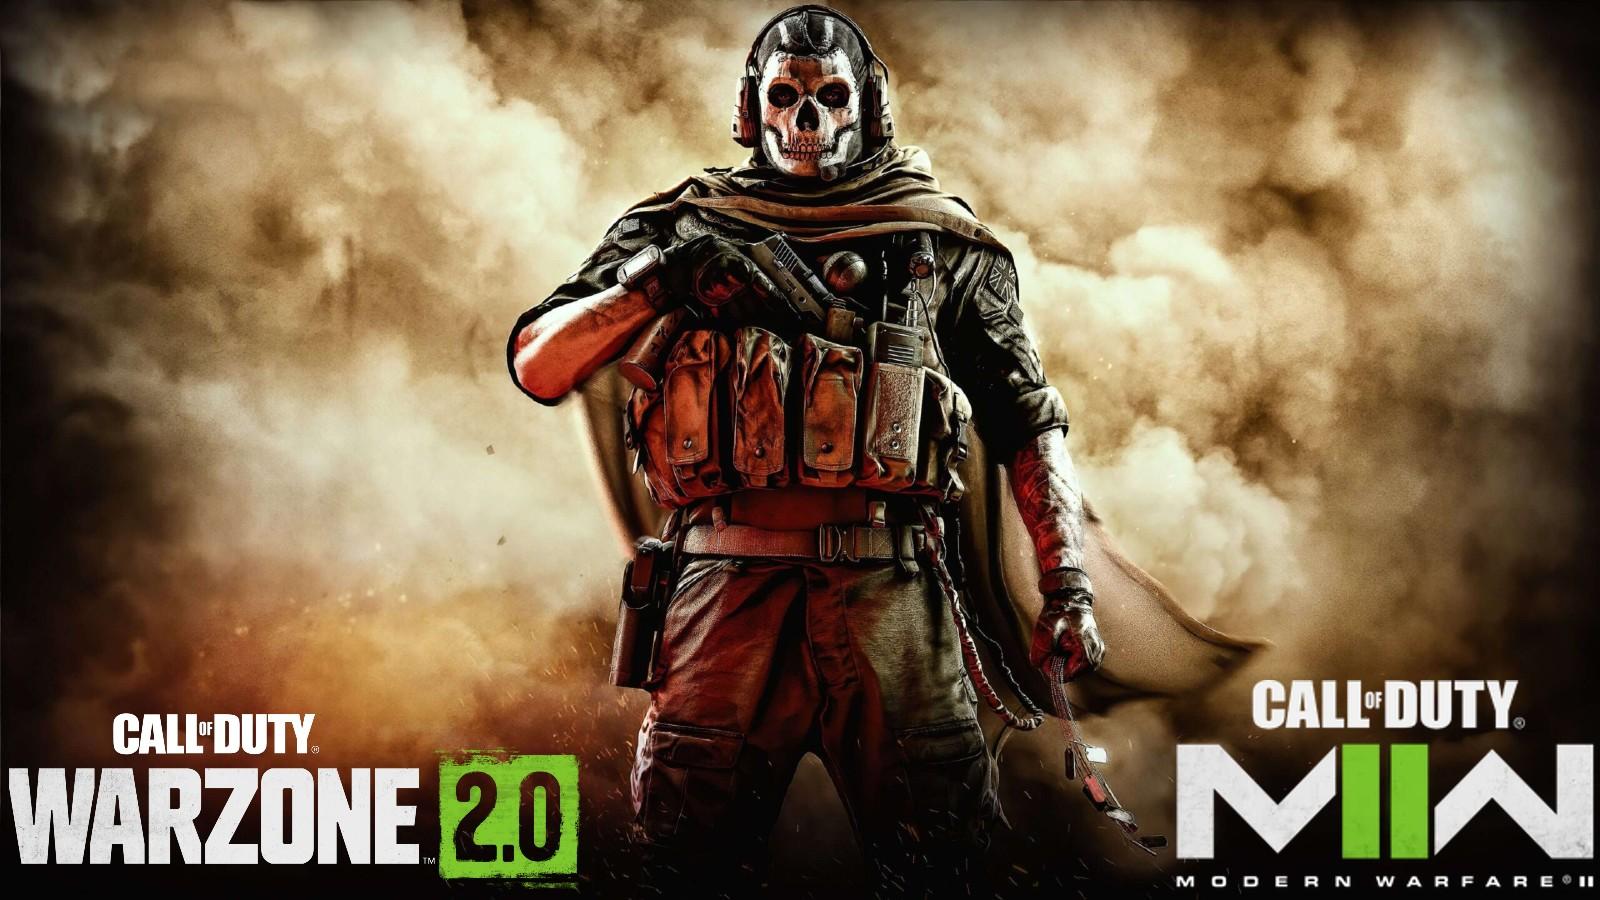 Ghost in Modern Warfare 2 and Warzone 2.